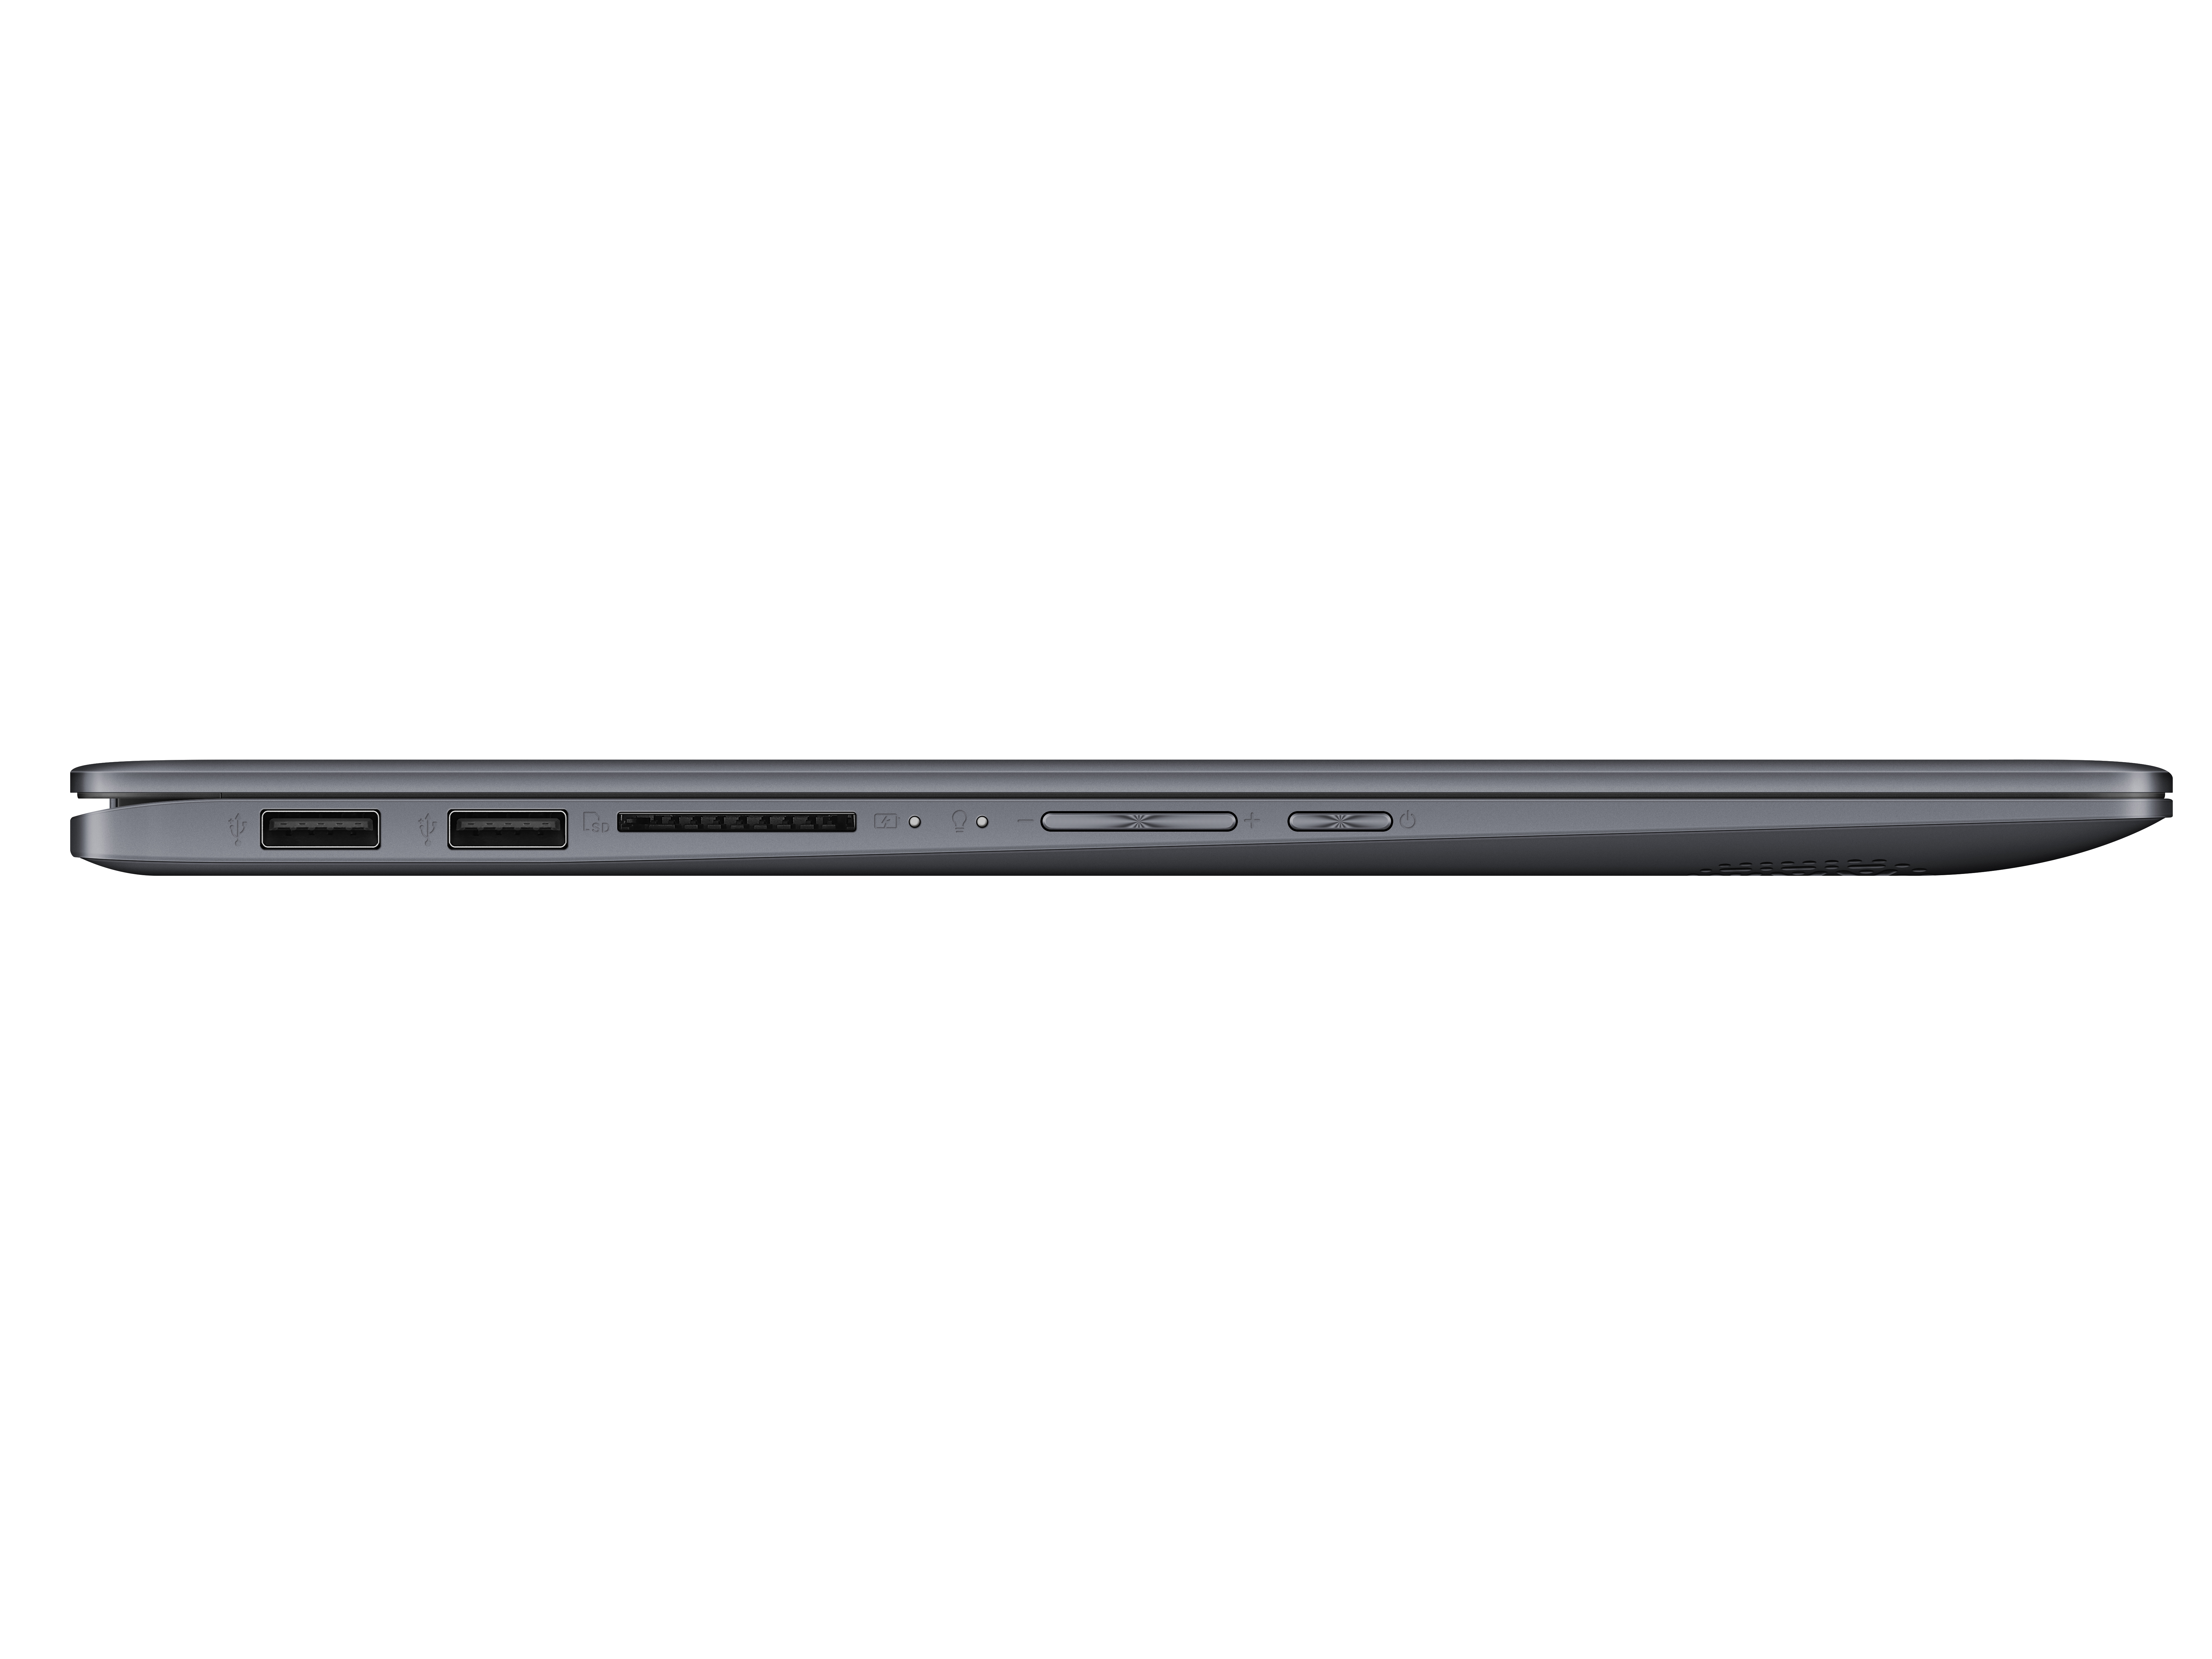 ASUS VivoBook Flip 14 Laptop, 14" FHD Touch, Intel Core i3-10110U, 4GB DDR4, 128GB SSD, Fingerprint, Windows 10 Home in S Mode, Star Gray, TP412FA-WS31T - image 6 of 9